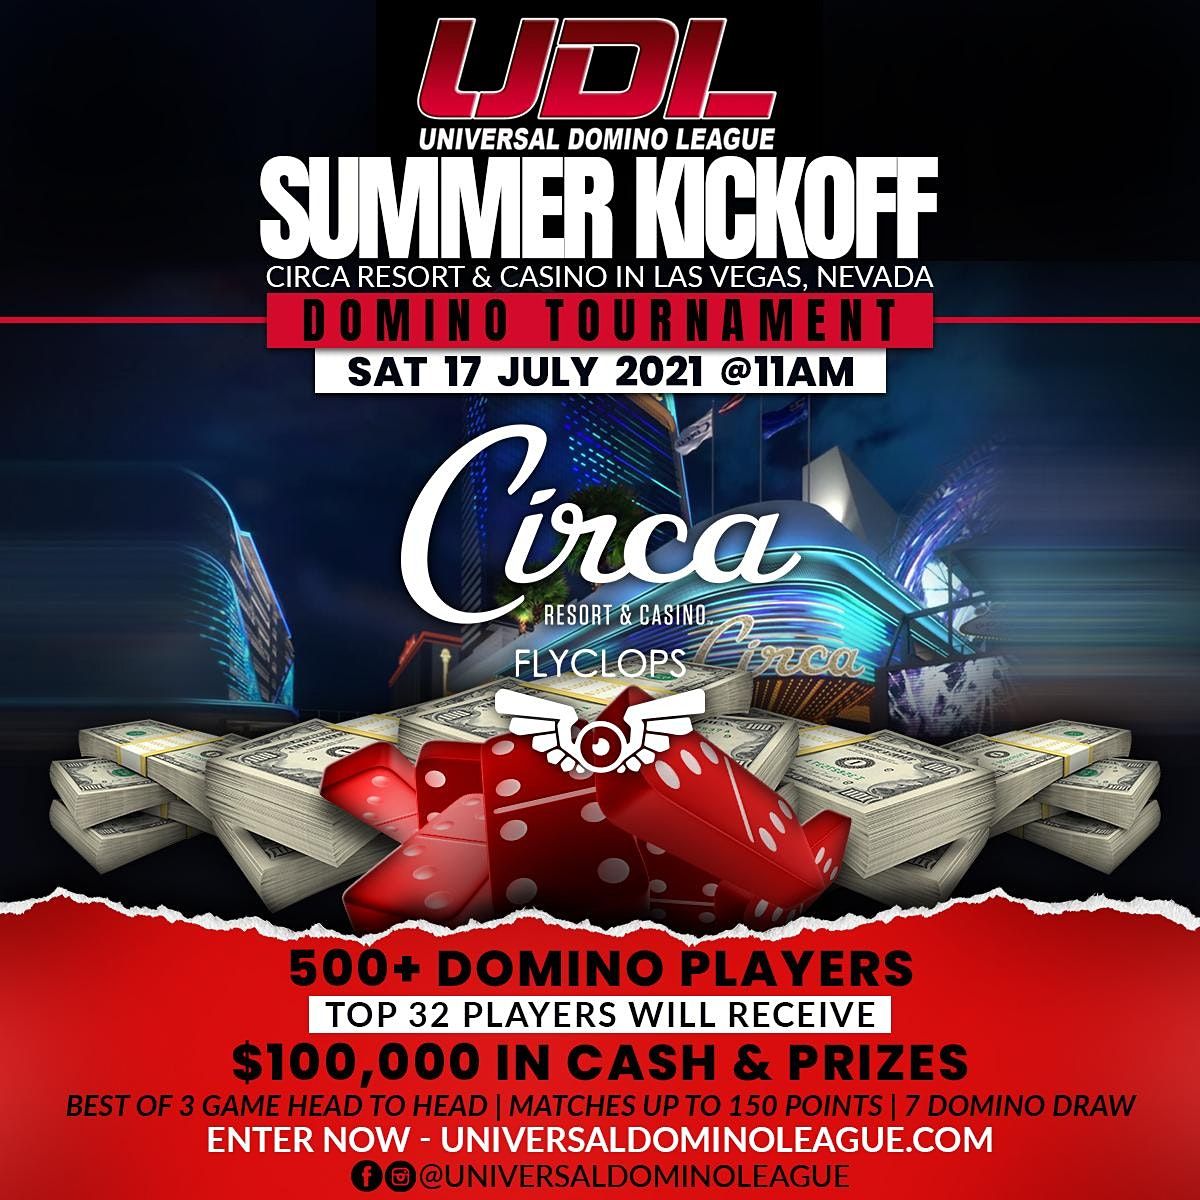 UDL Summer Kickoff Domino Tournament at the Circa Resort & Casino